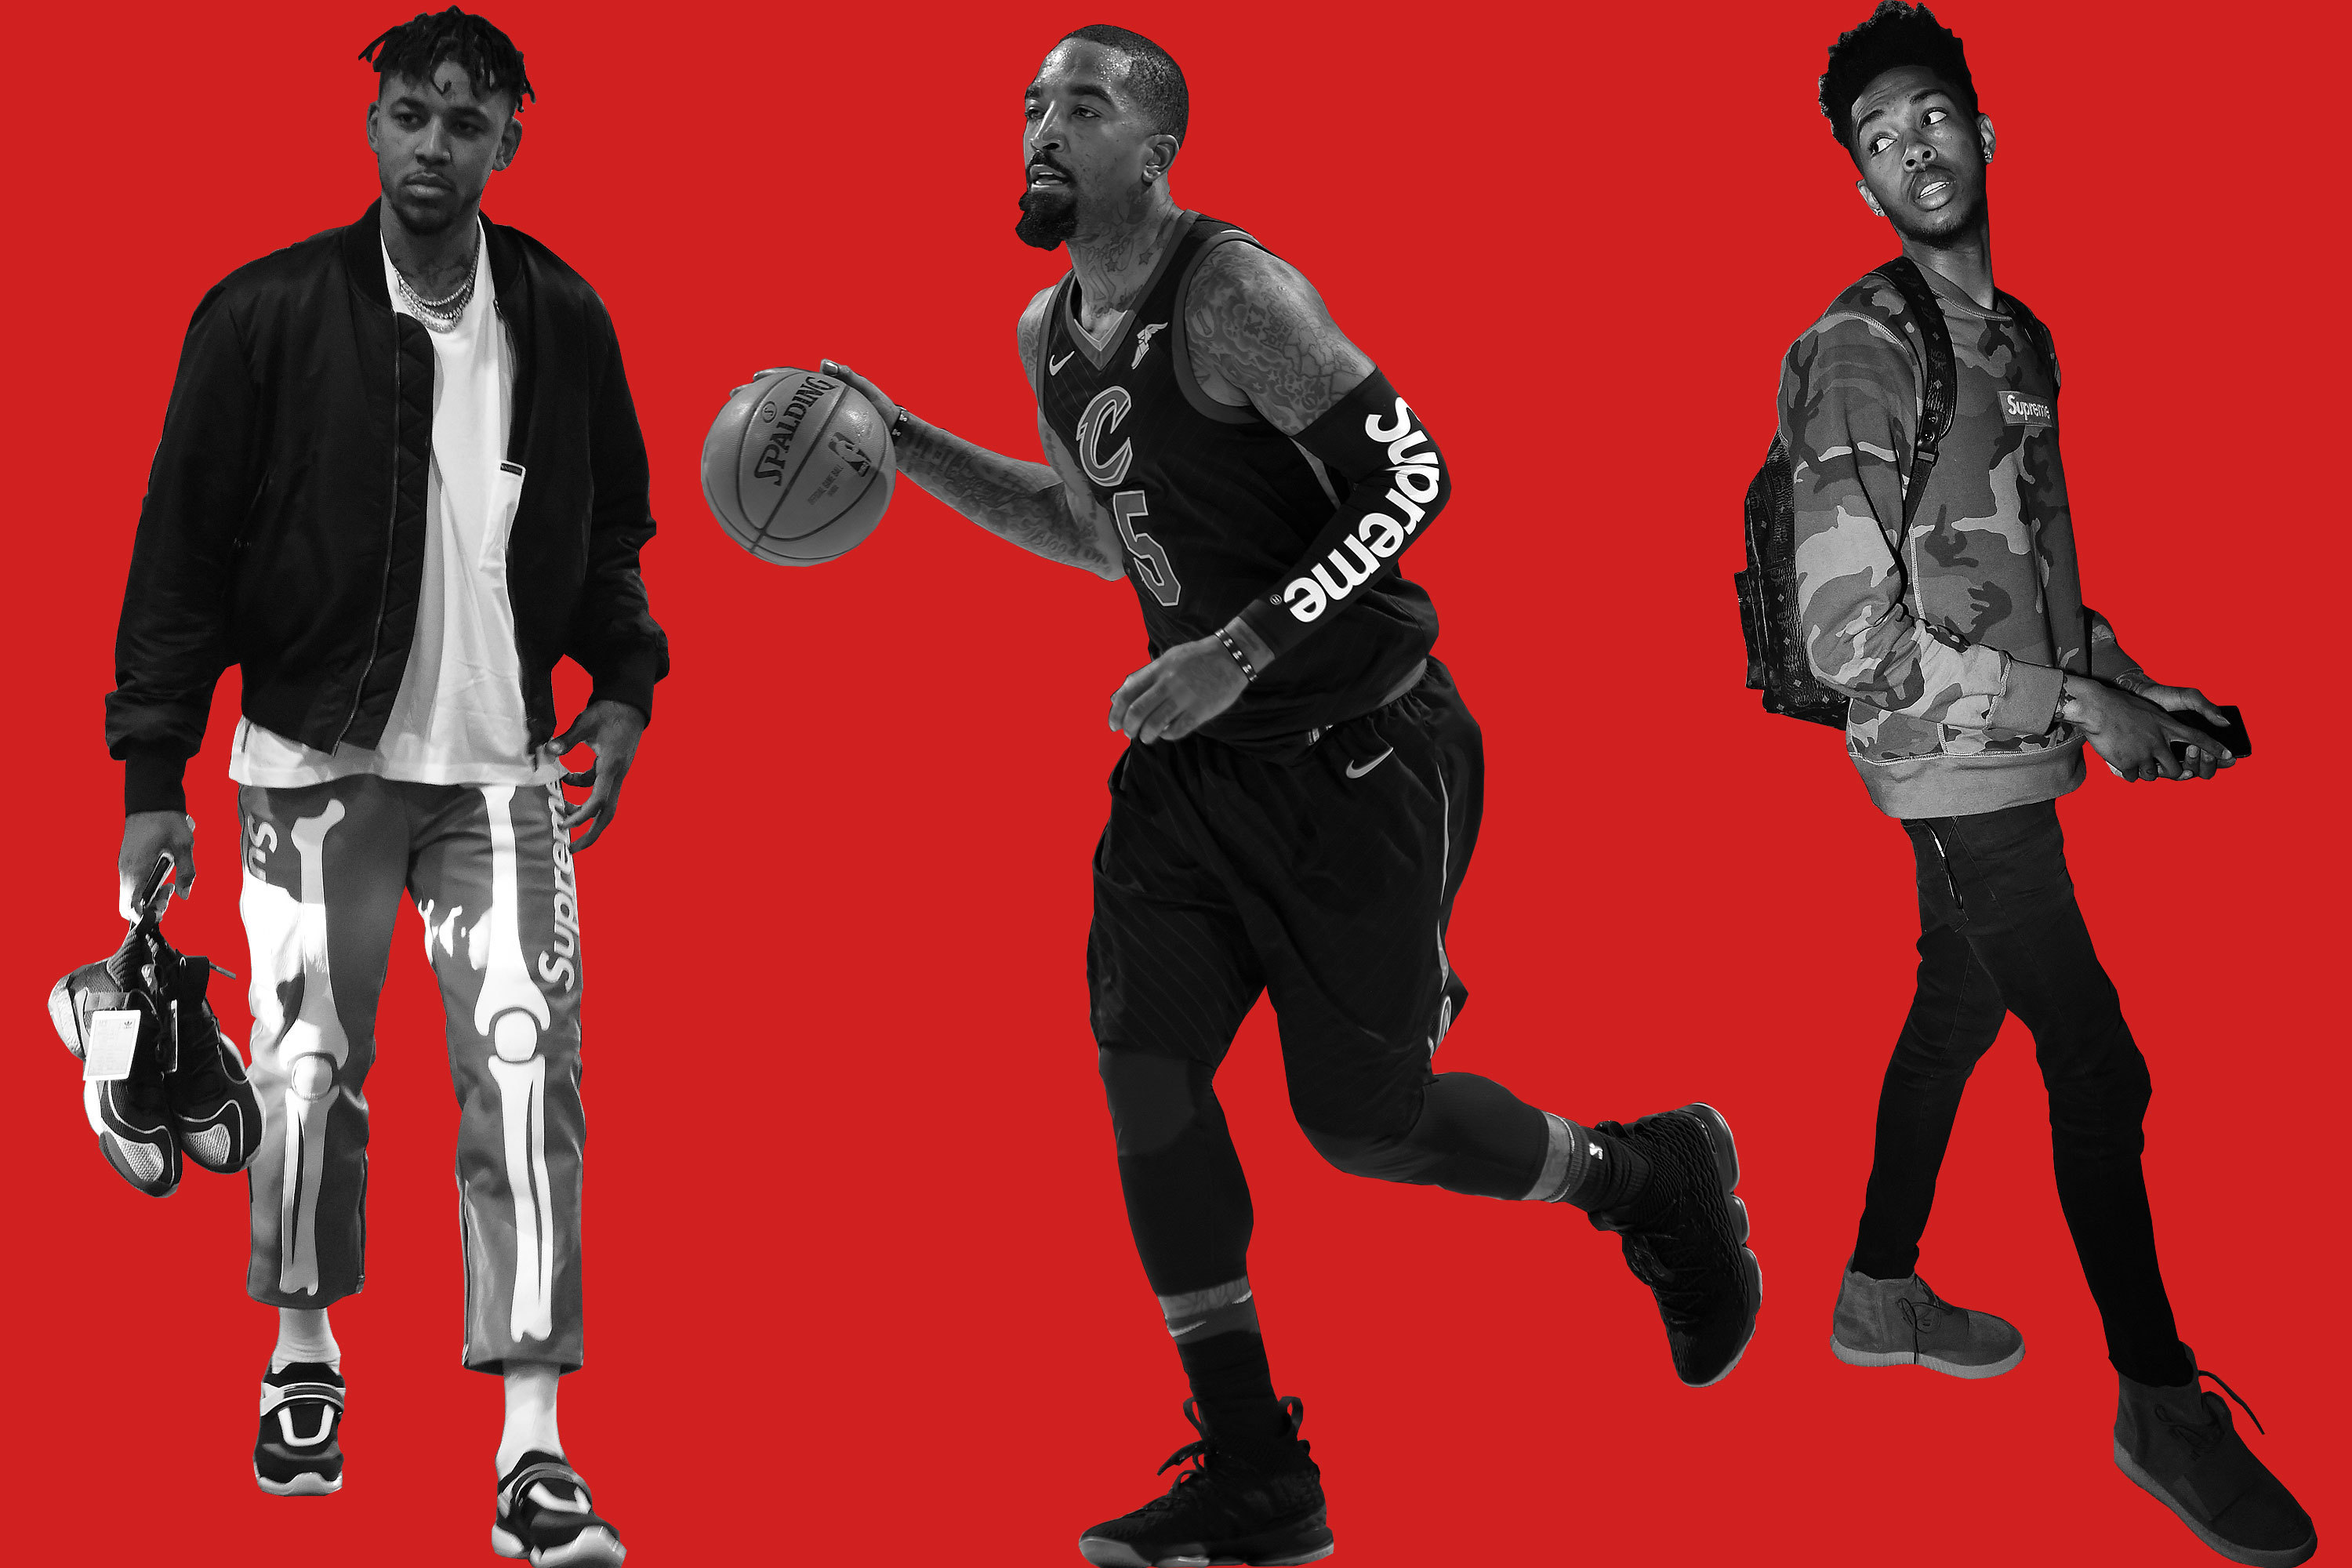 Mitchell & Ness NBA Authentic Jersey ' Phoenix Suns - Amar'e Stoudemir -  KICKS CREW